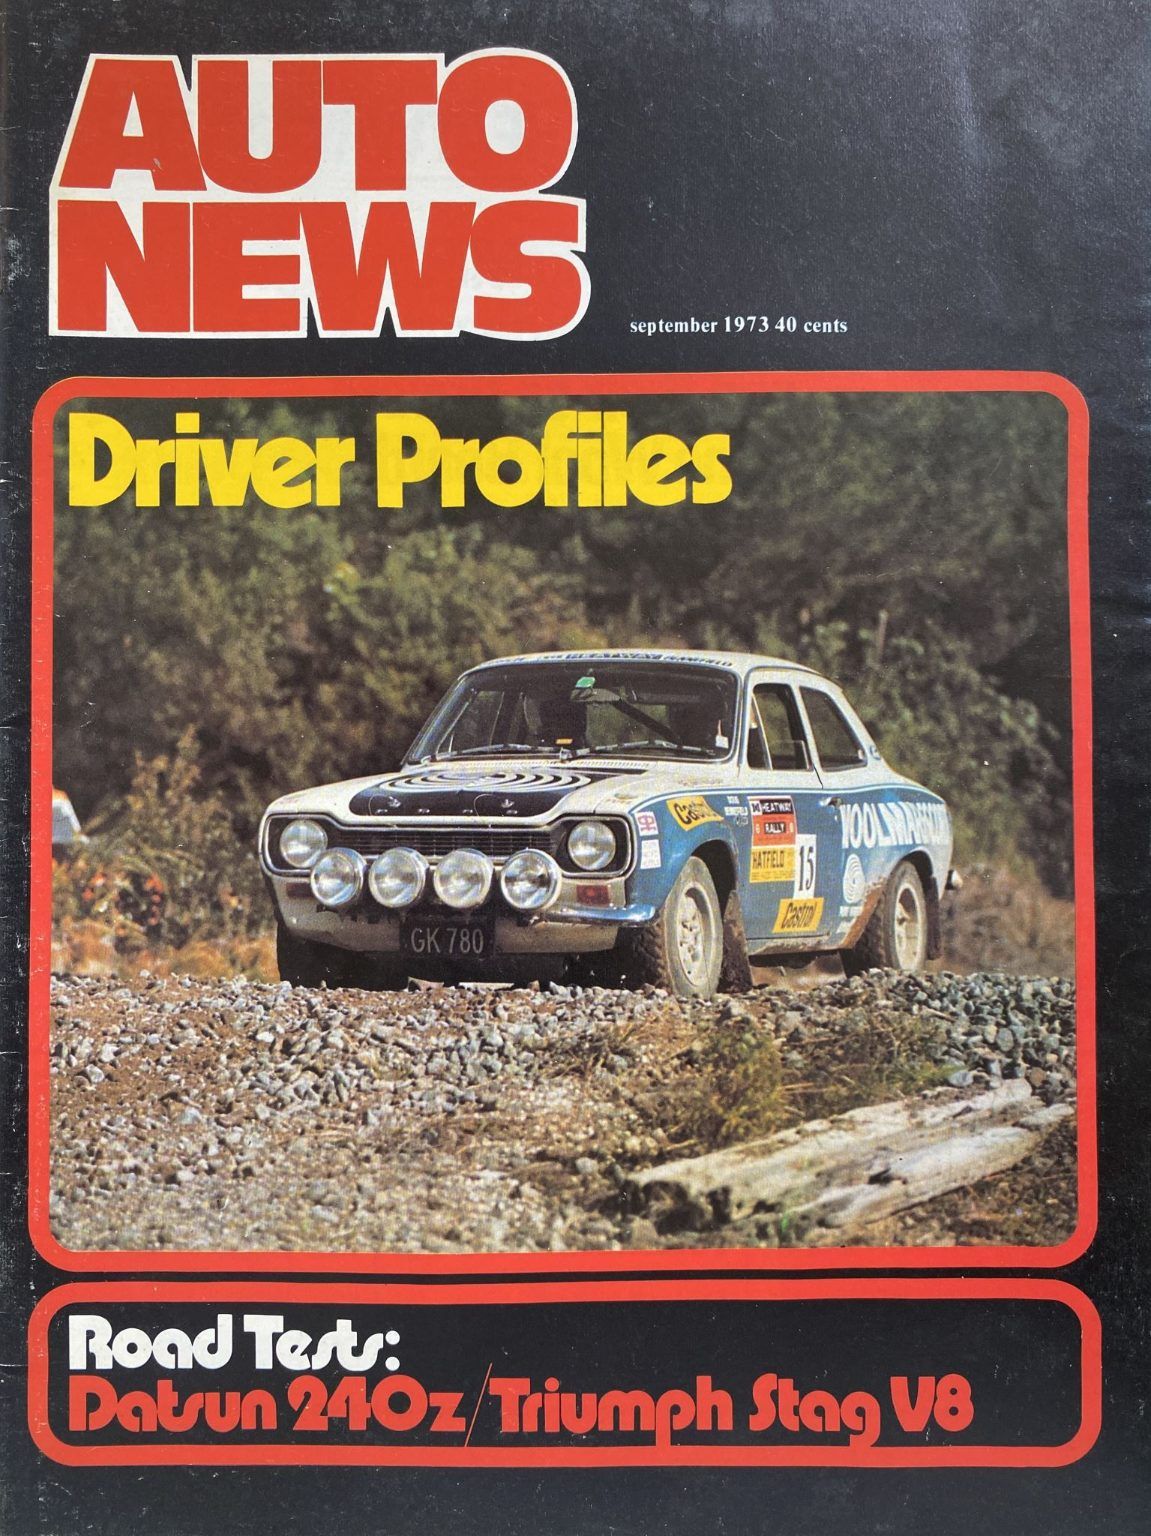 OLD MAGAZINE: Auto News - September 1973